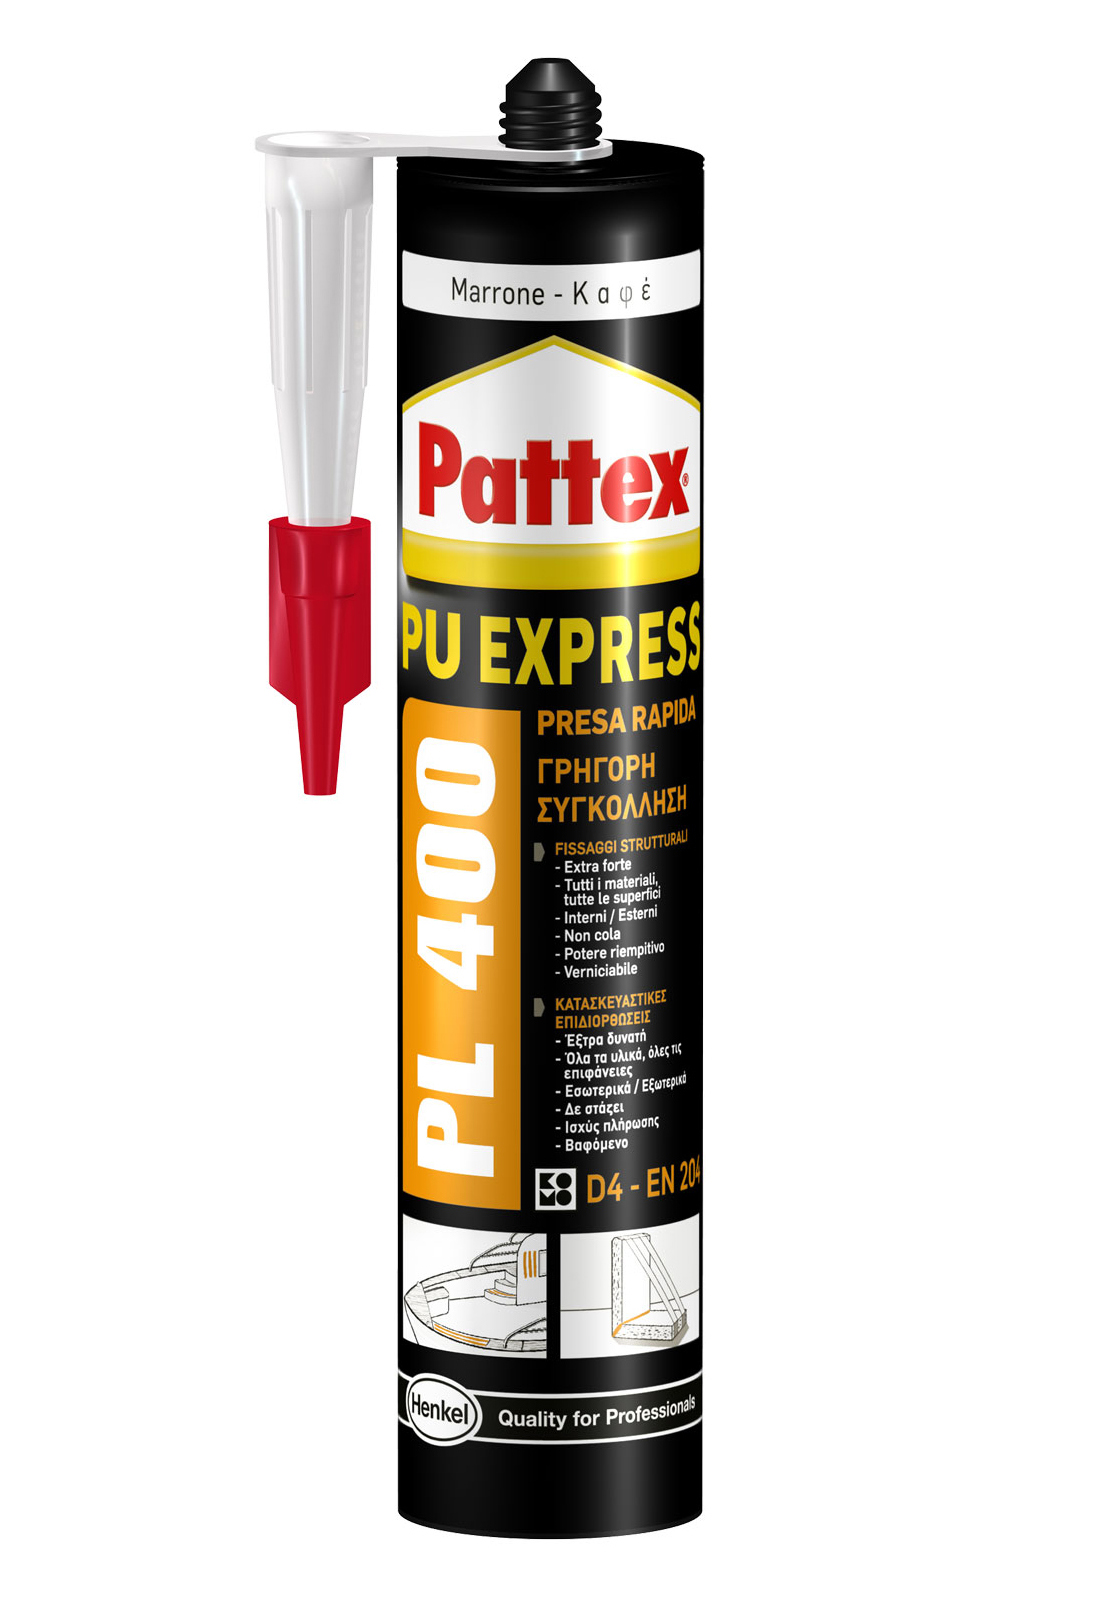 Pattex pl400 express 475g